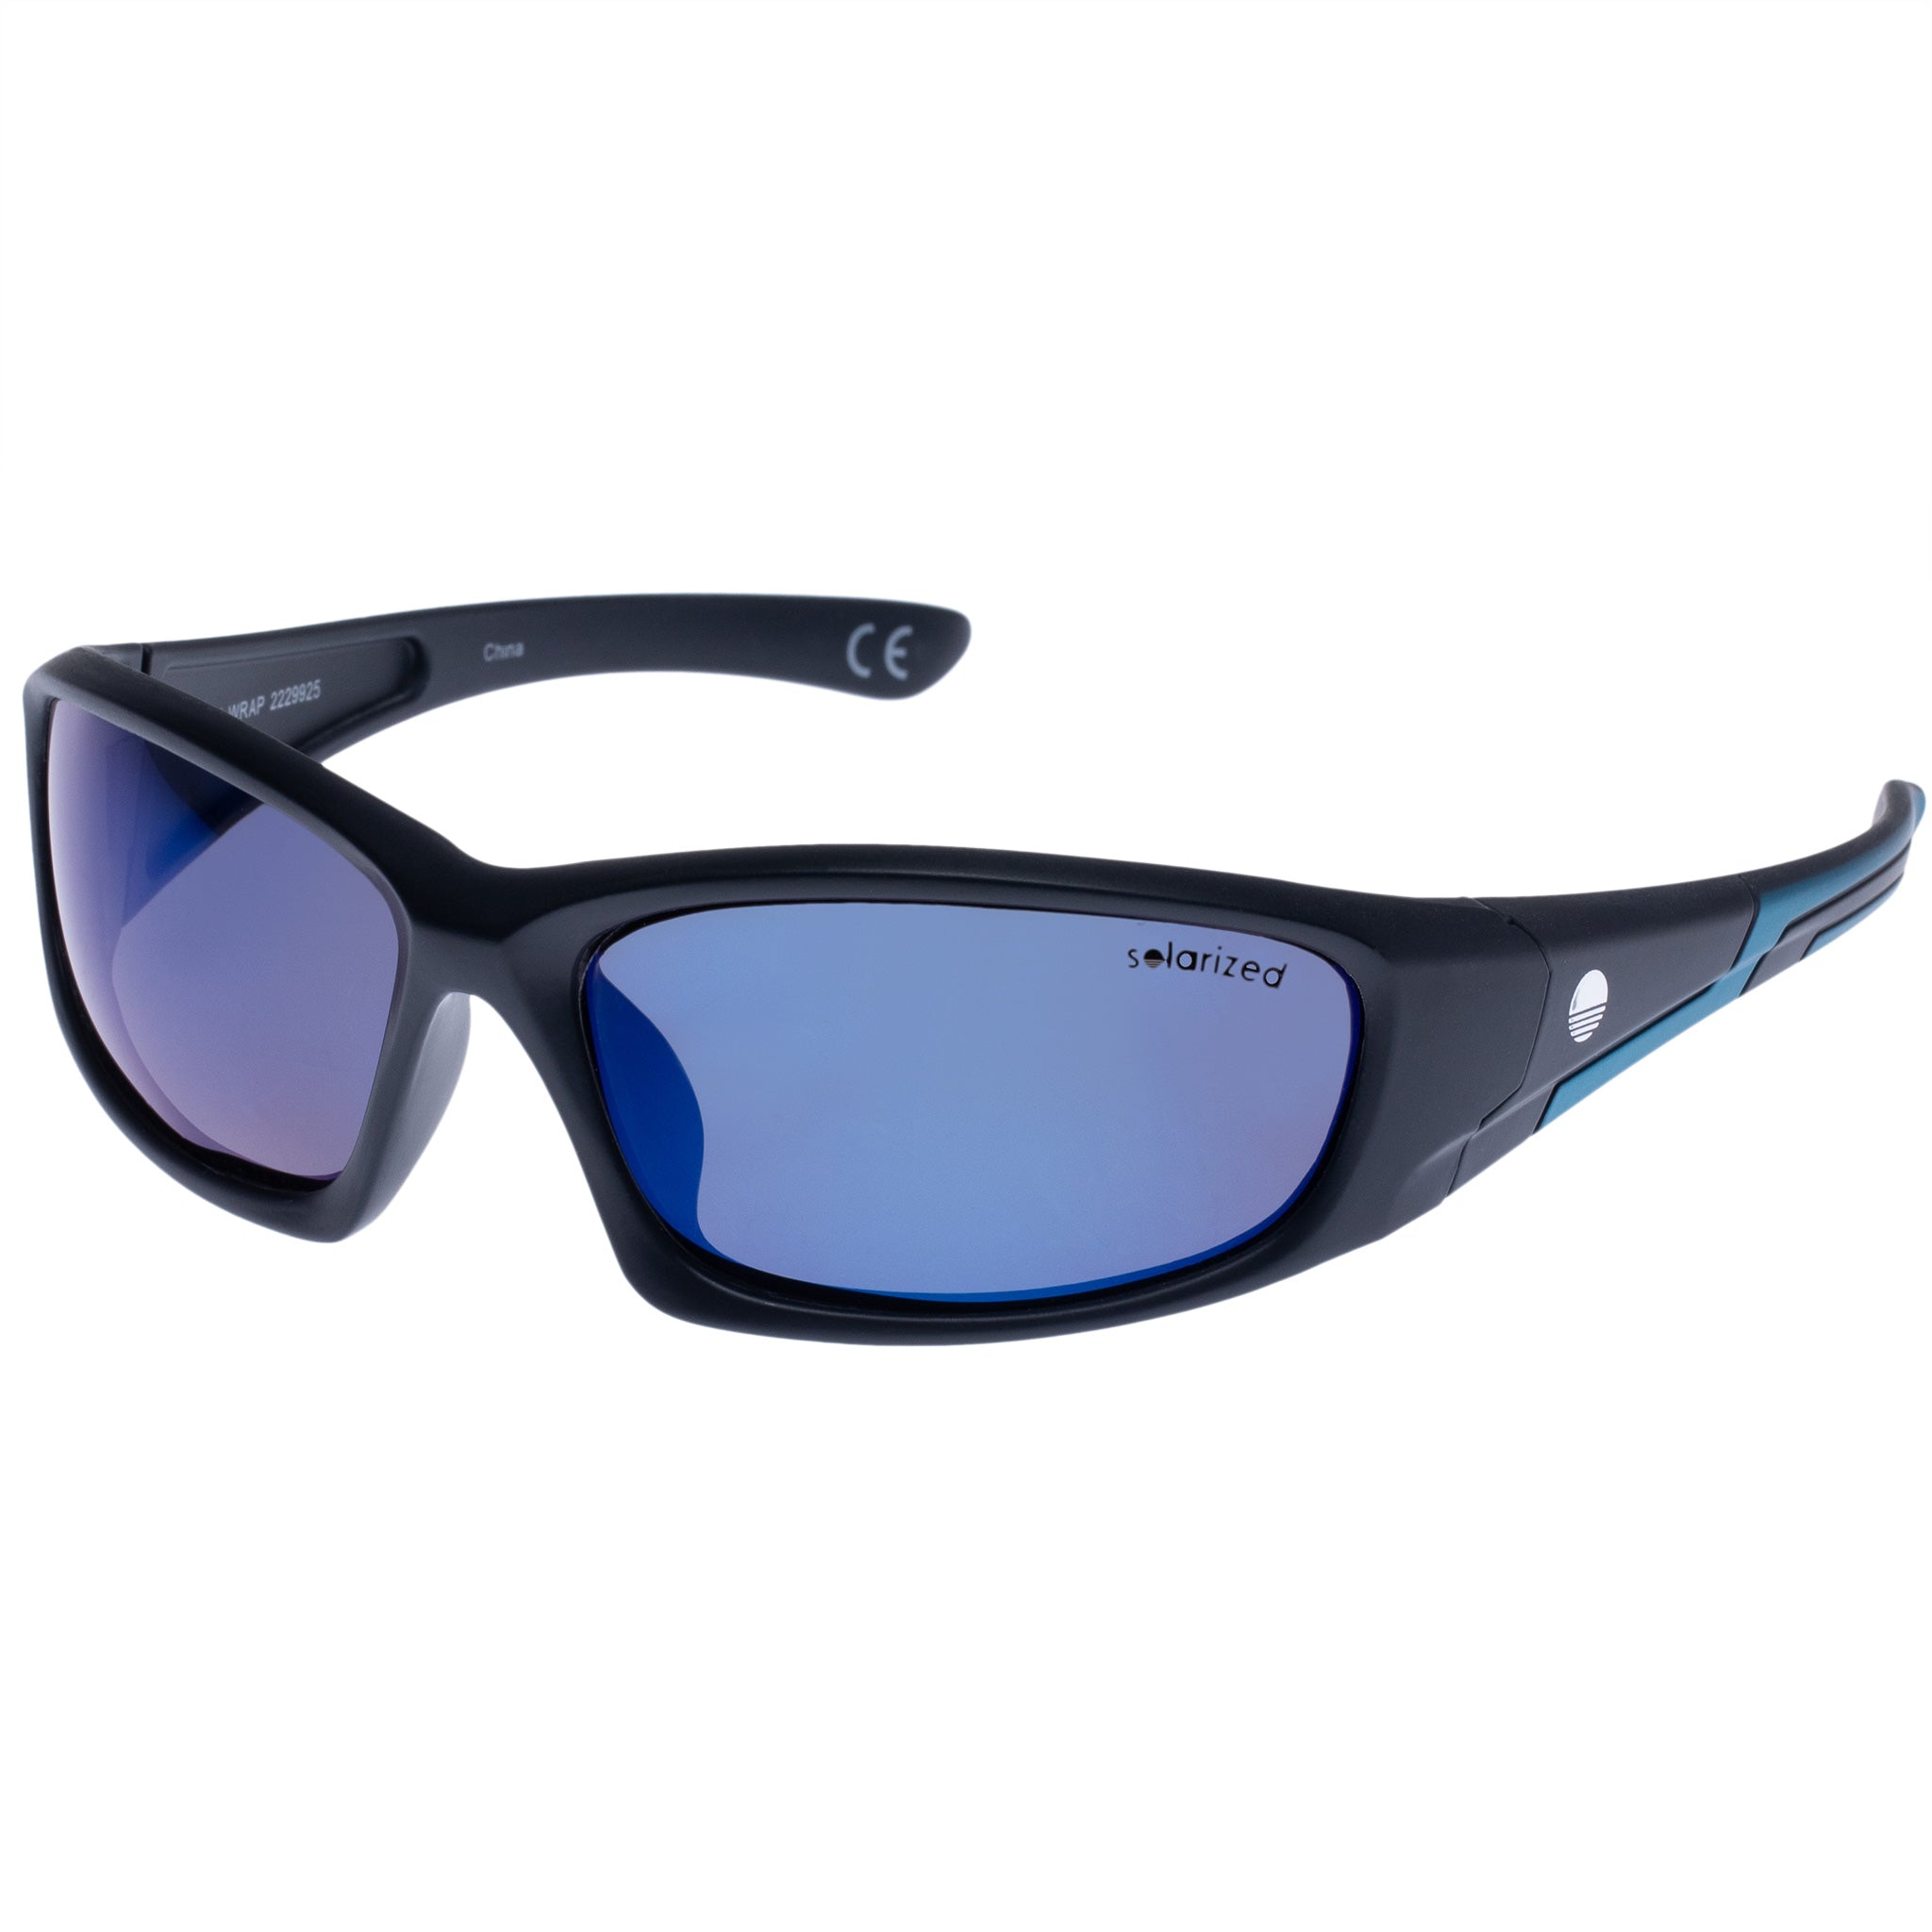 Quiksilver | Accessories | New Quicksilver Unisex Polarized Sunglasses Neon  Transparent Green | Poshmark